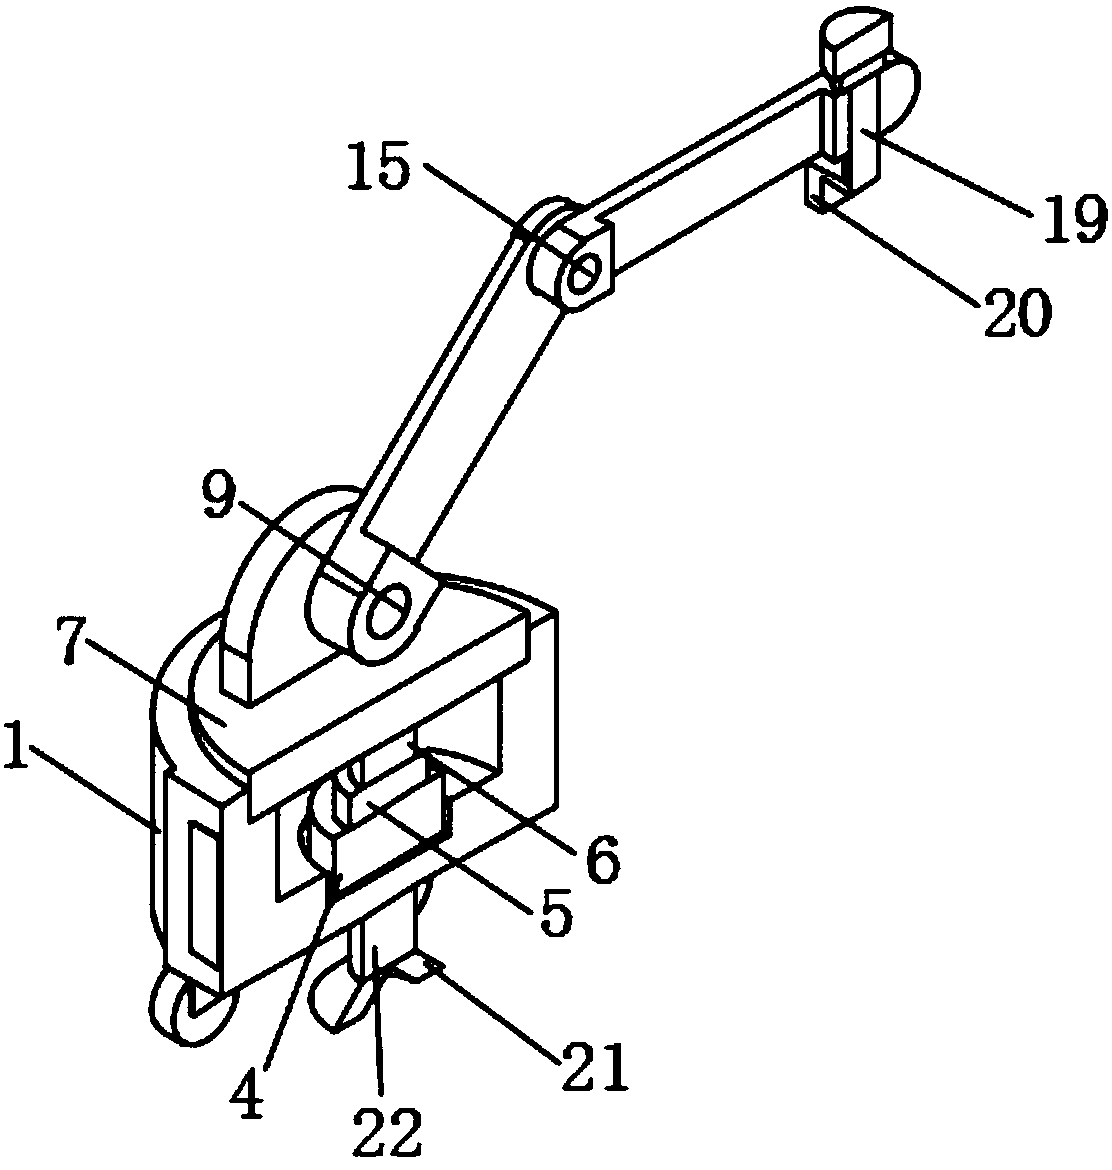 Mechanical arm for teaching demonstration